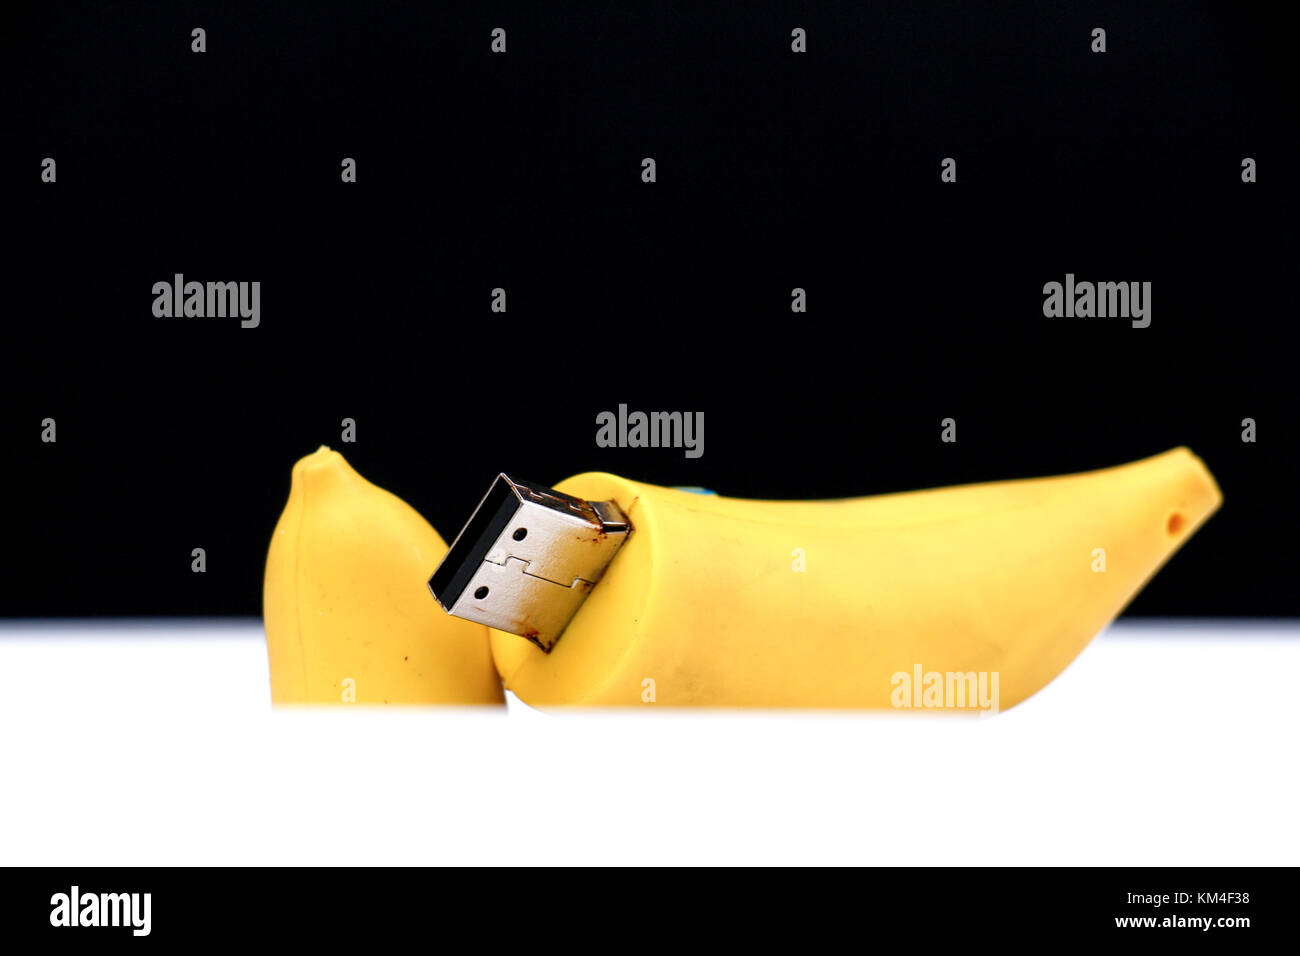 Funny USB Flash Drive,banana design, image of a Stock Photo